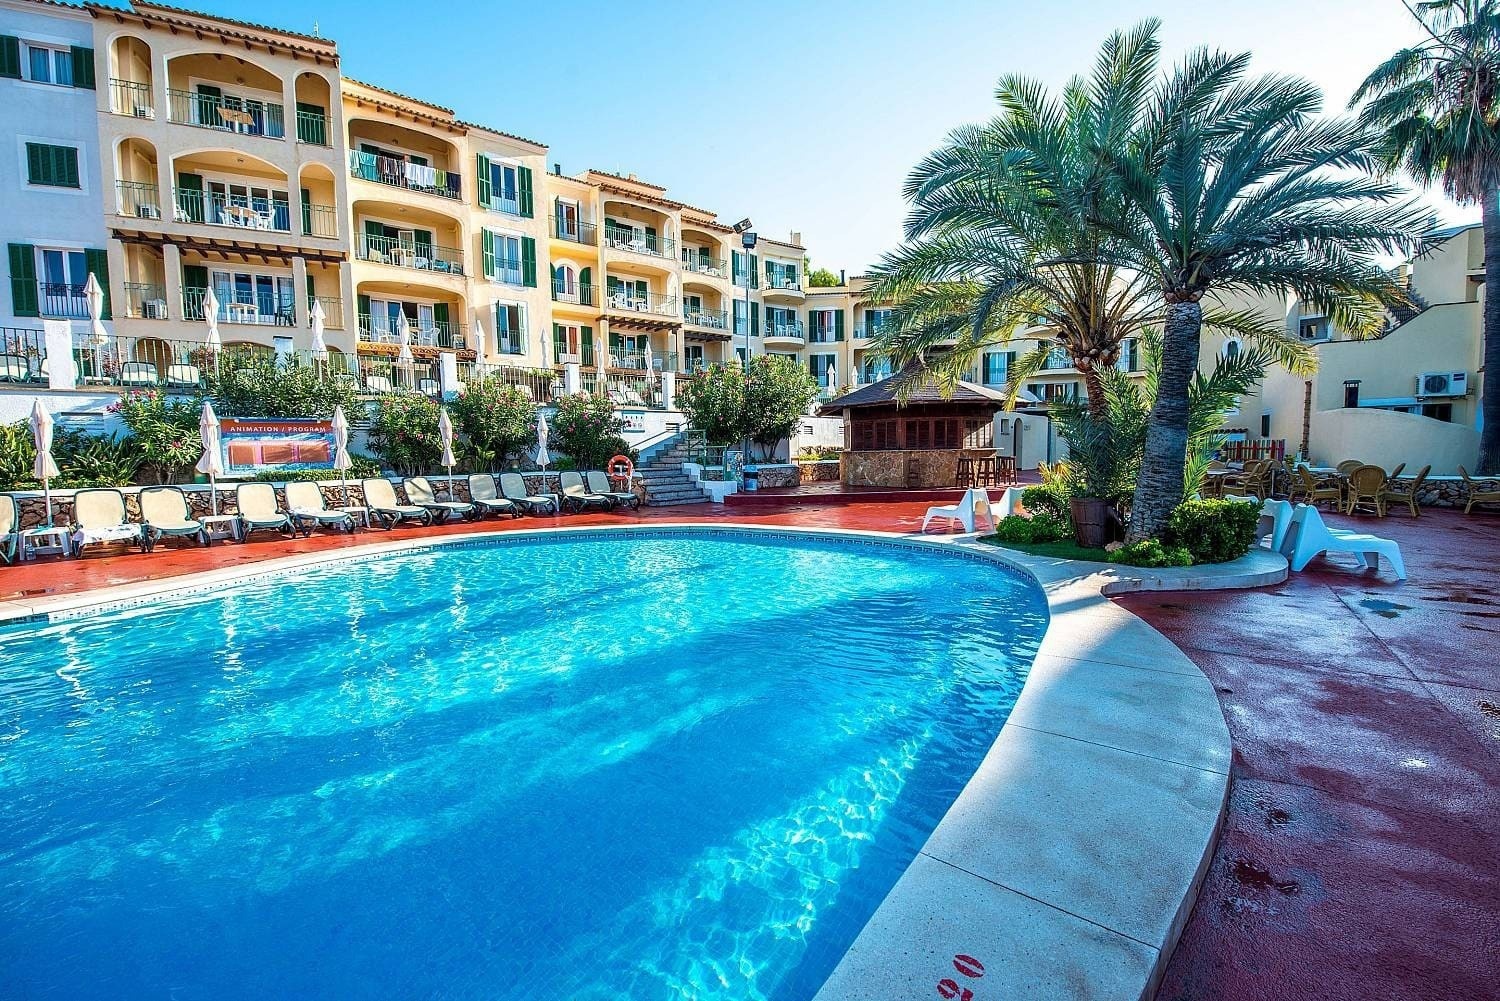 Facilities and outdoor pool of the Ona Cala Pi hotel, in Majorca